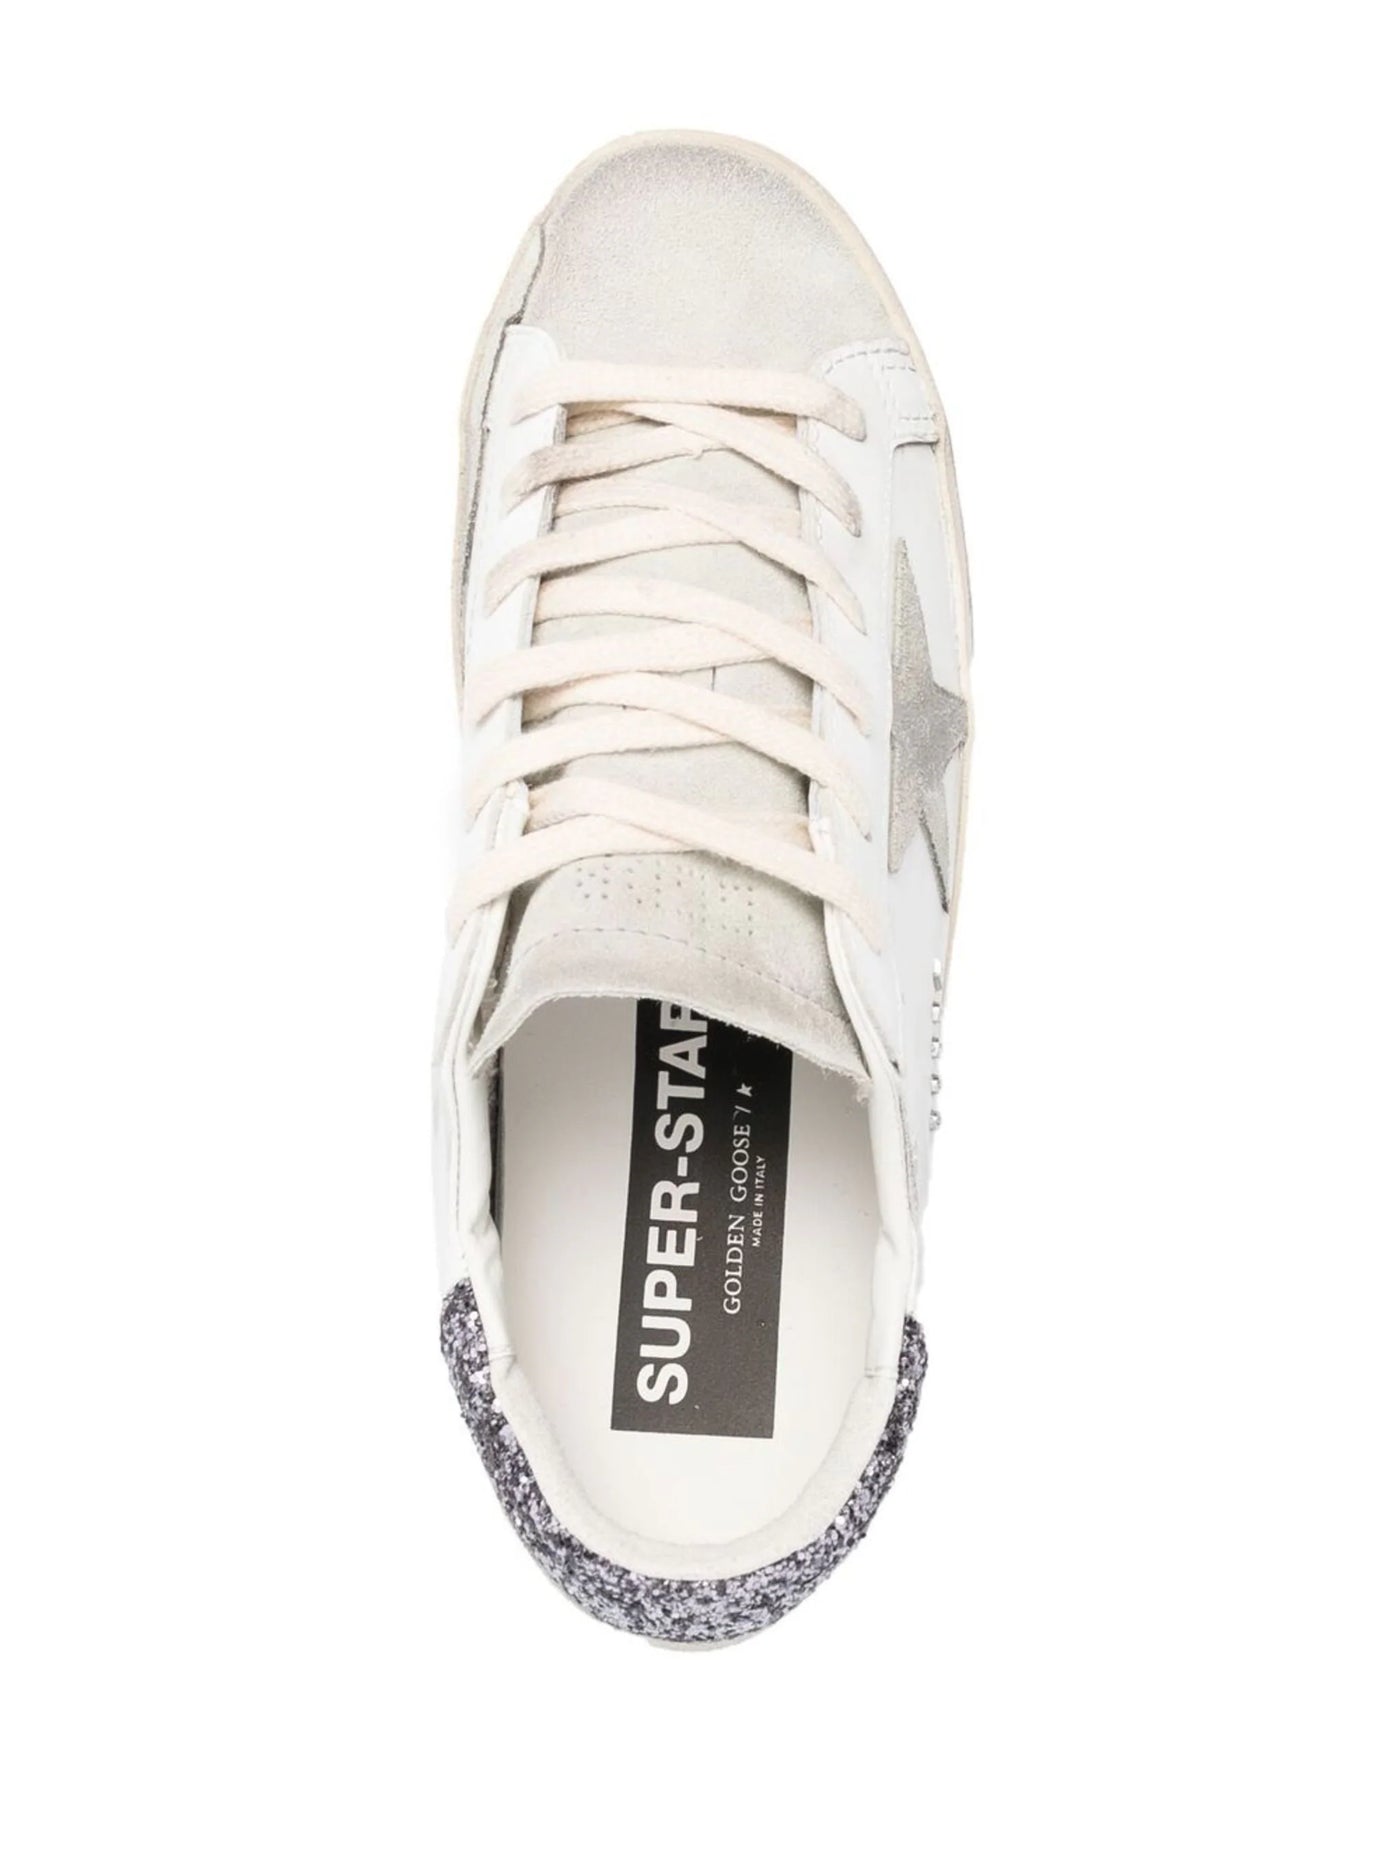 Superstar Sneaker - White/Ice/Grey